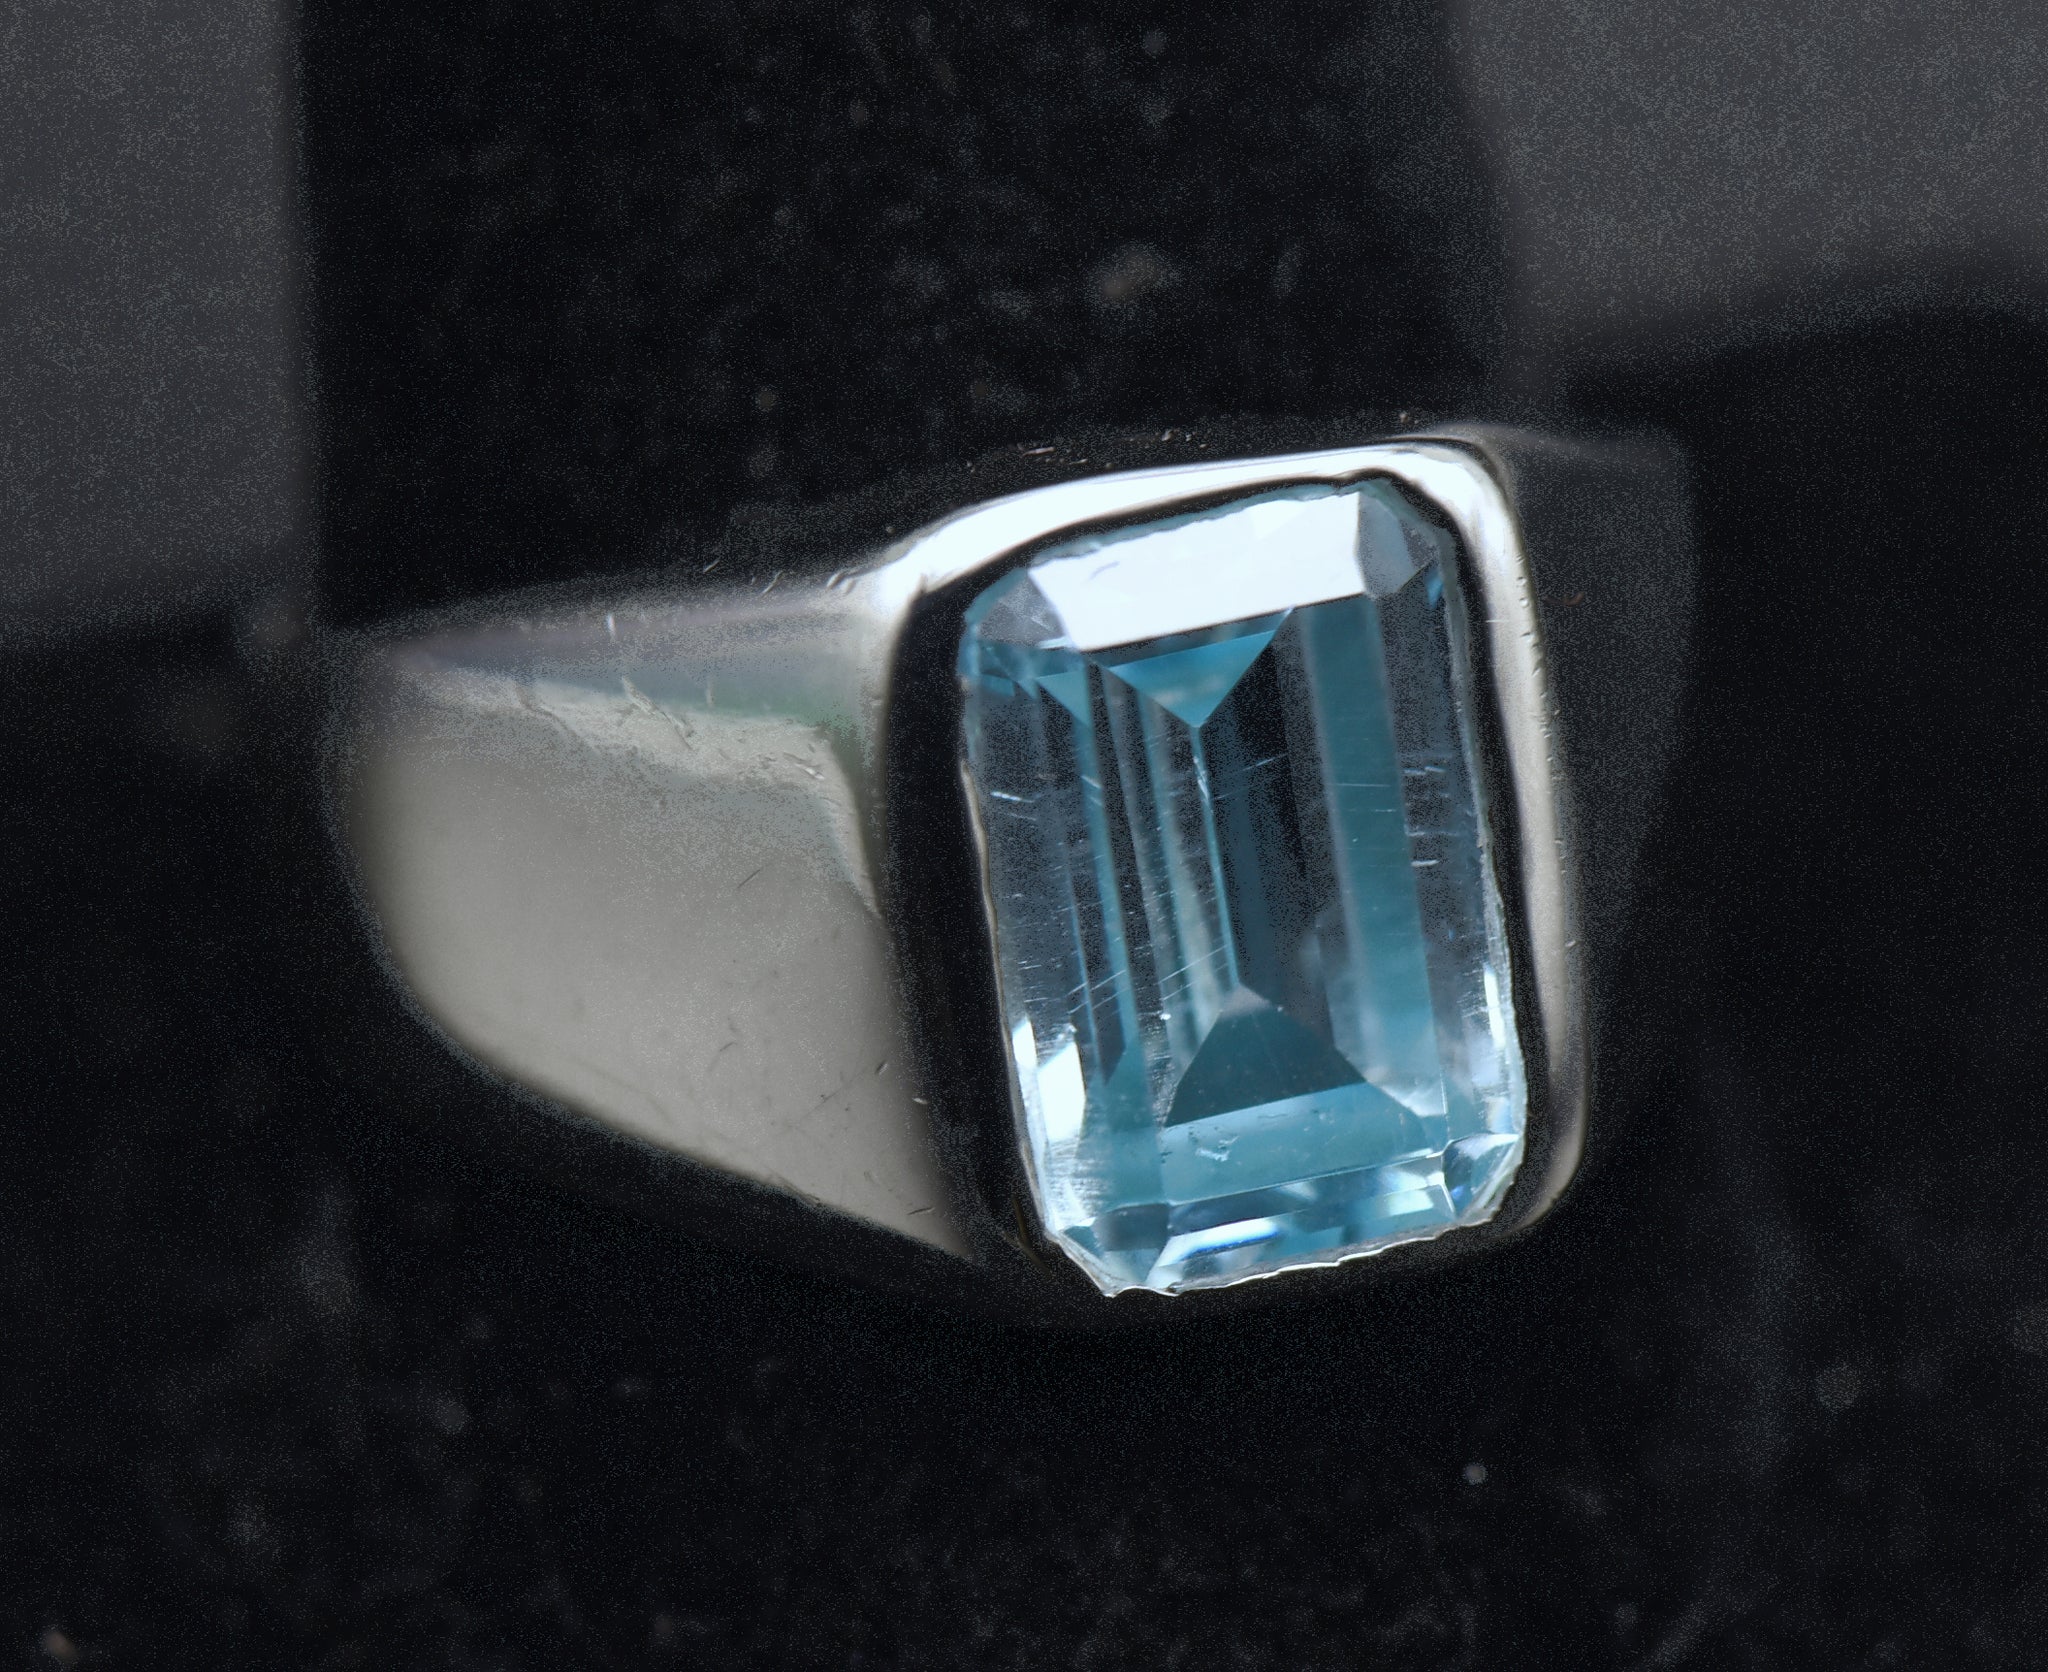 Vintage Sterling Silver Imitation Blue Topaz Ring - Size 12.25